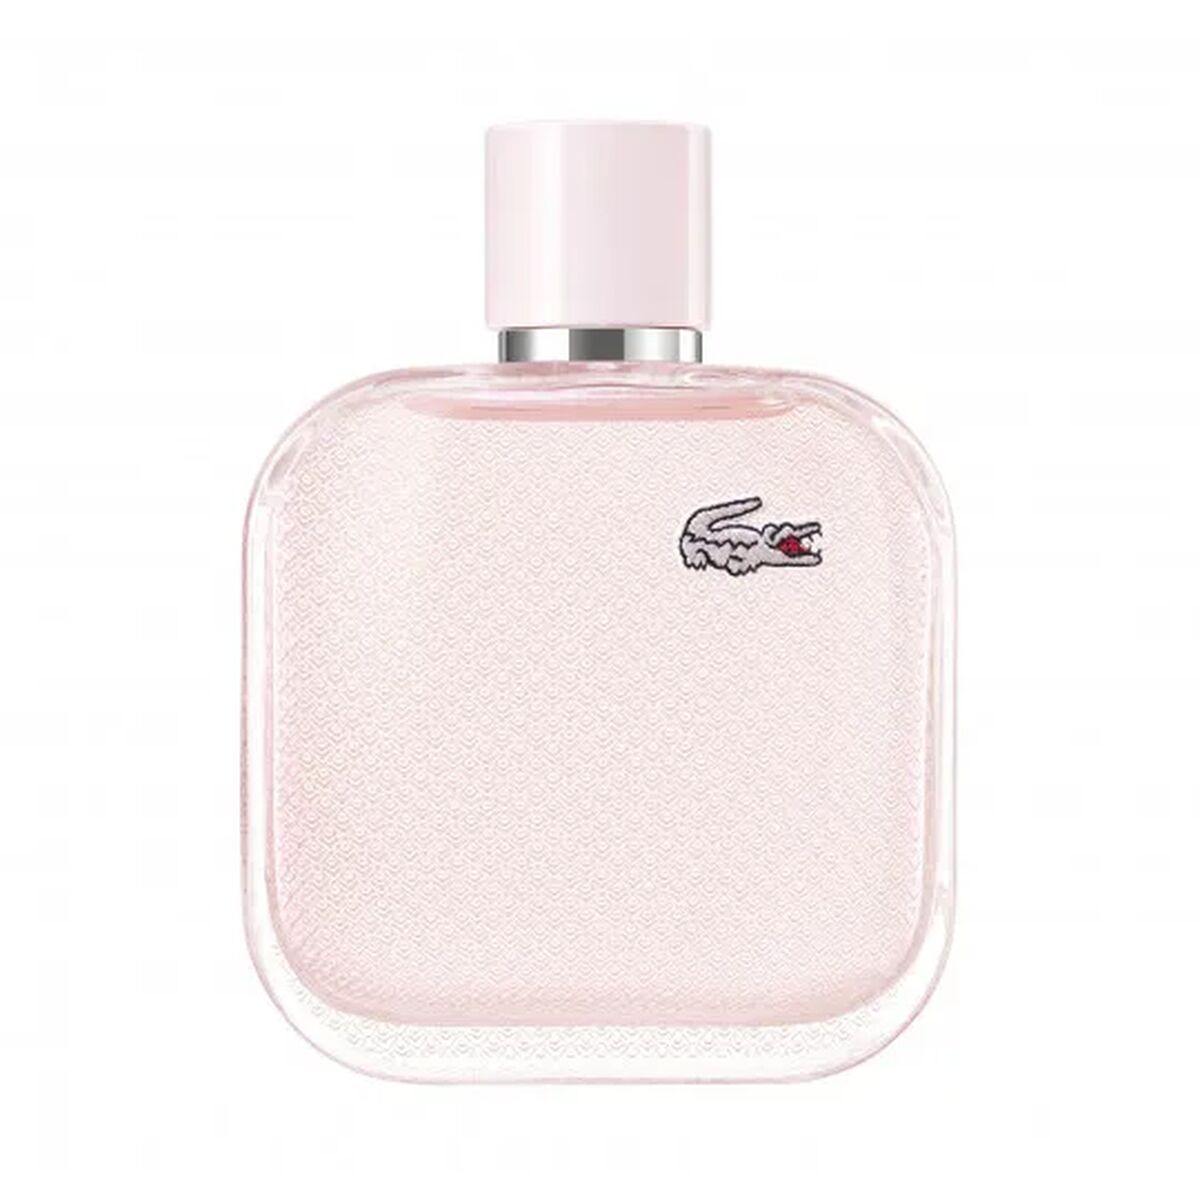 Women's Perfume Lacoste L.12.12 ROSE 100 ml